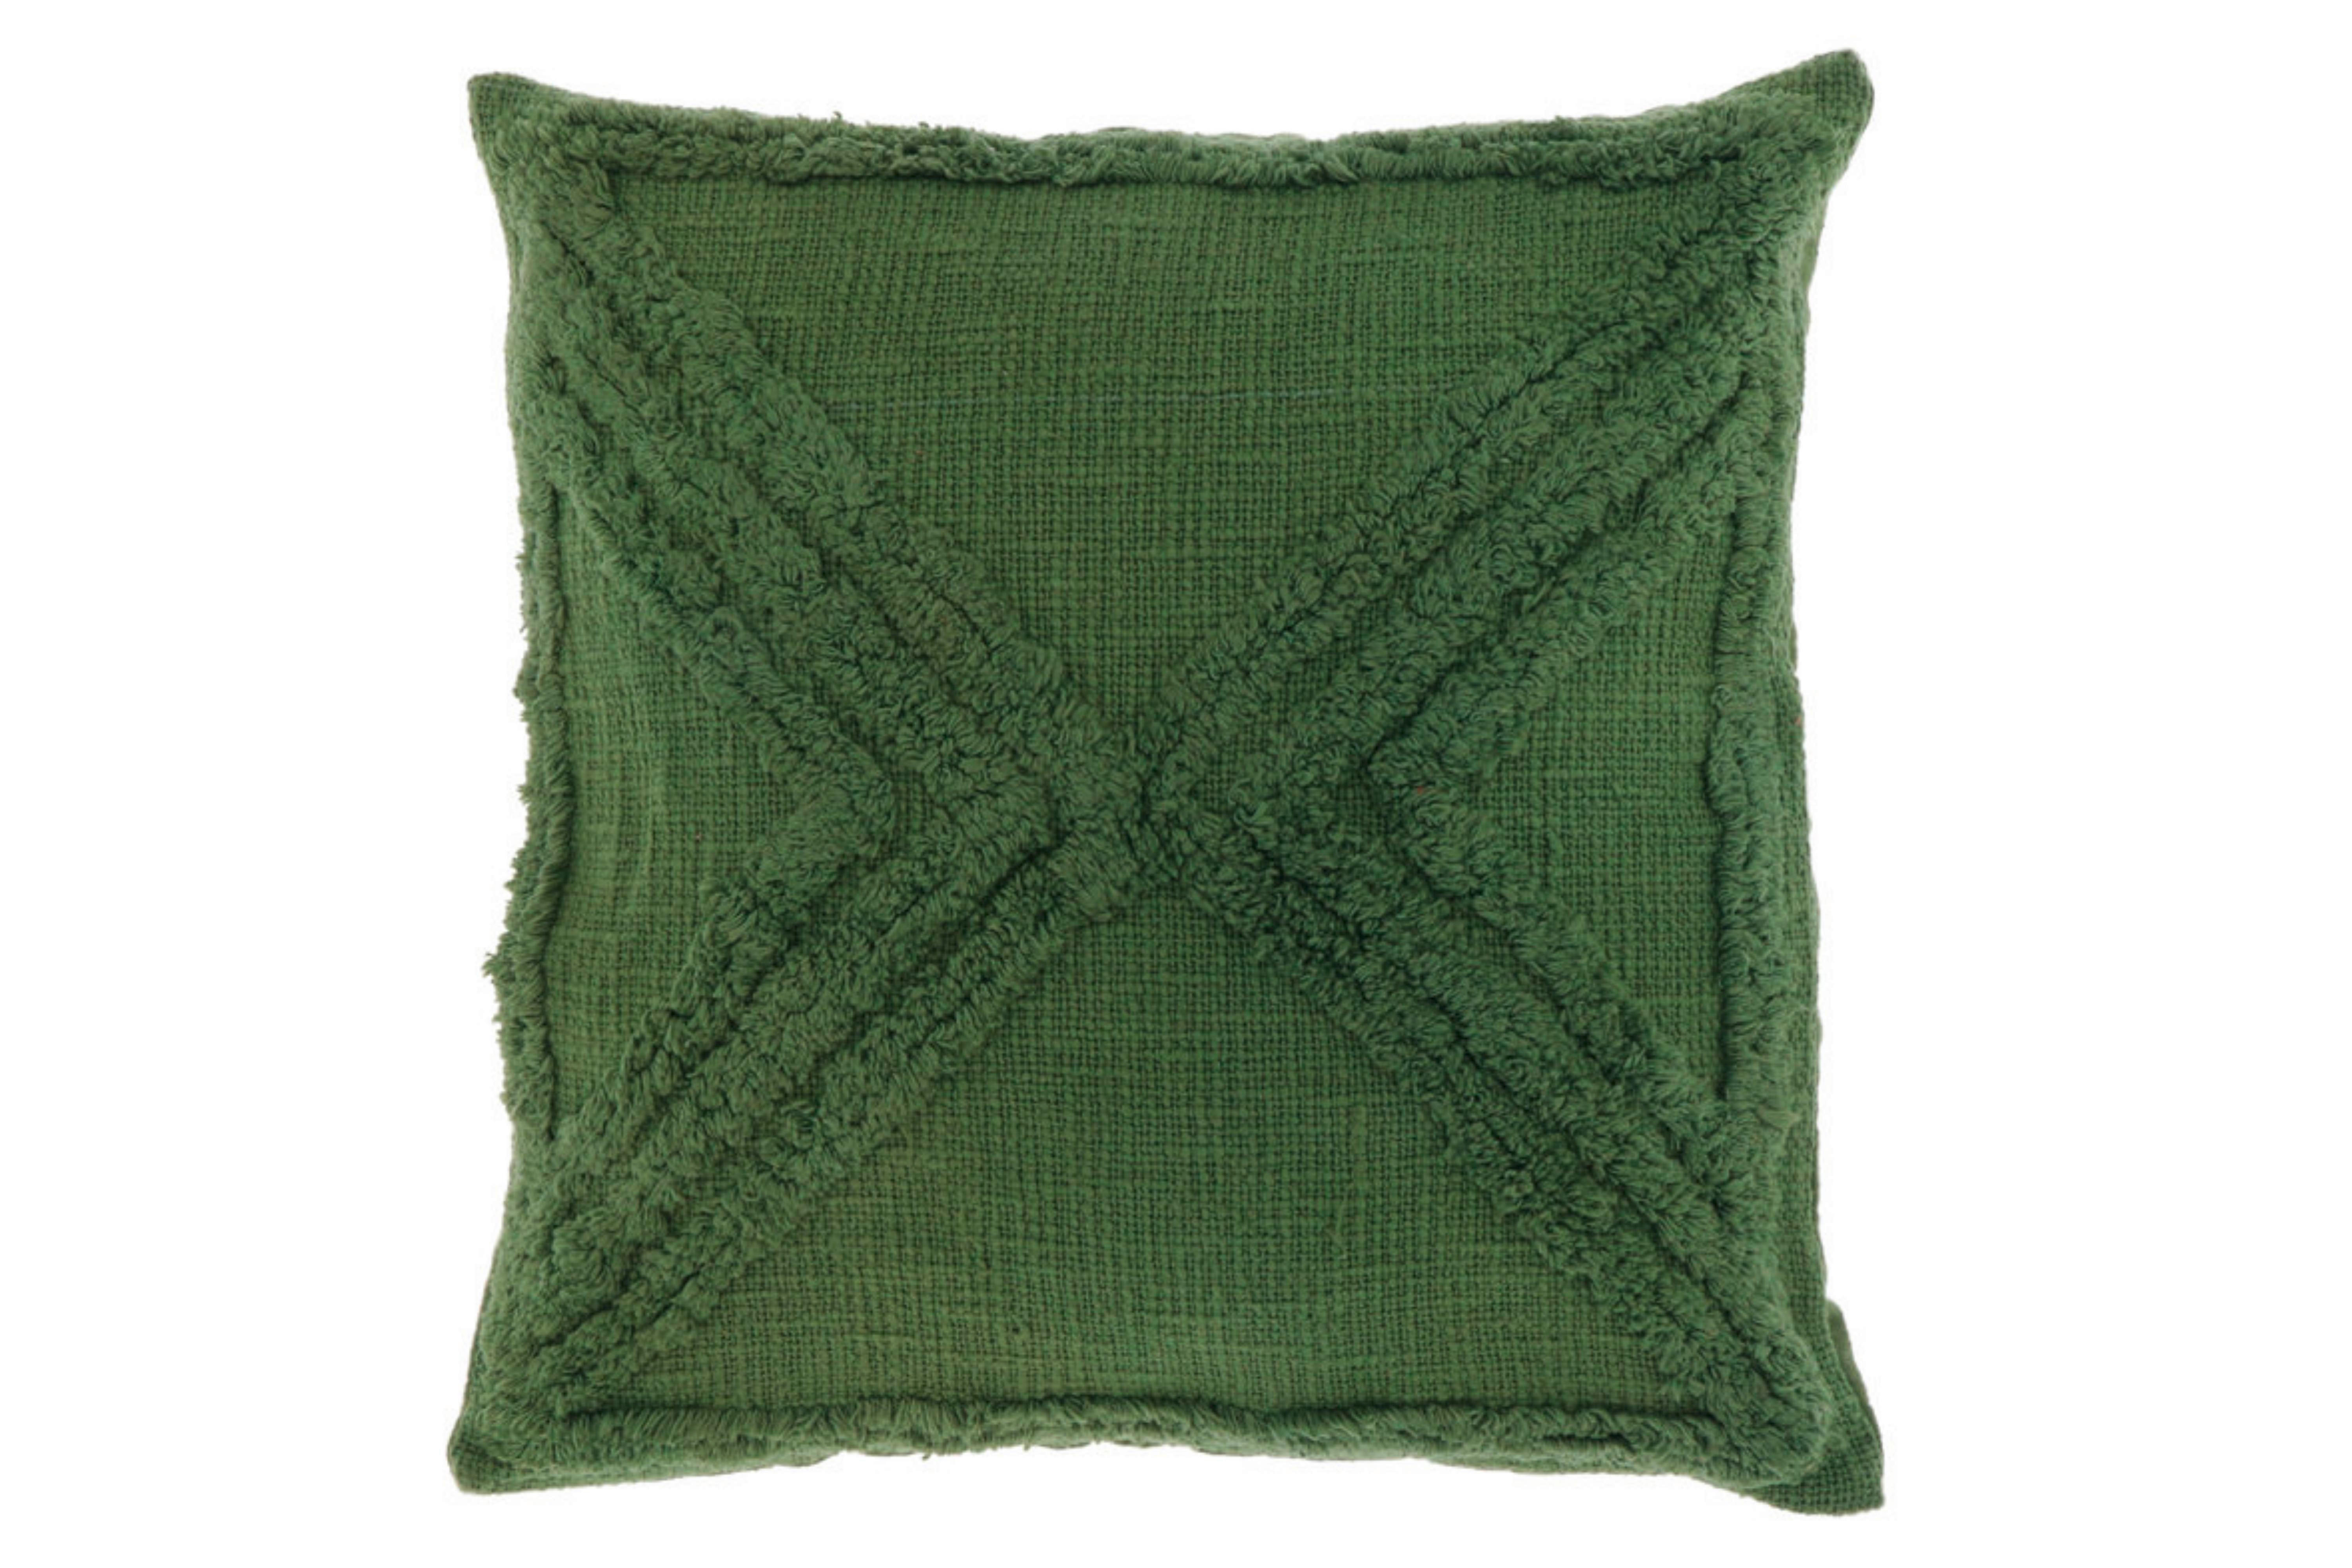 UKRASNI JASTUČIĆ 45/45 cm   - zelena, Basics, tekstil (45/45cm)